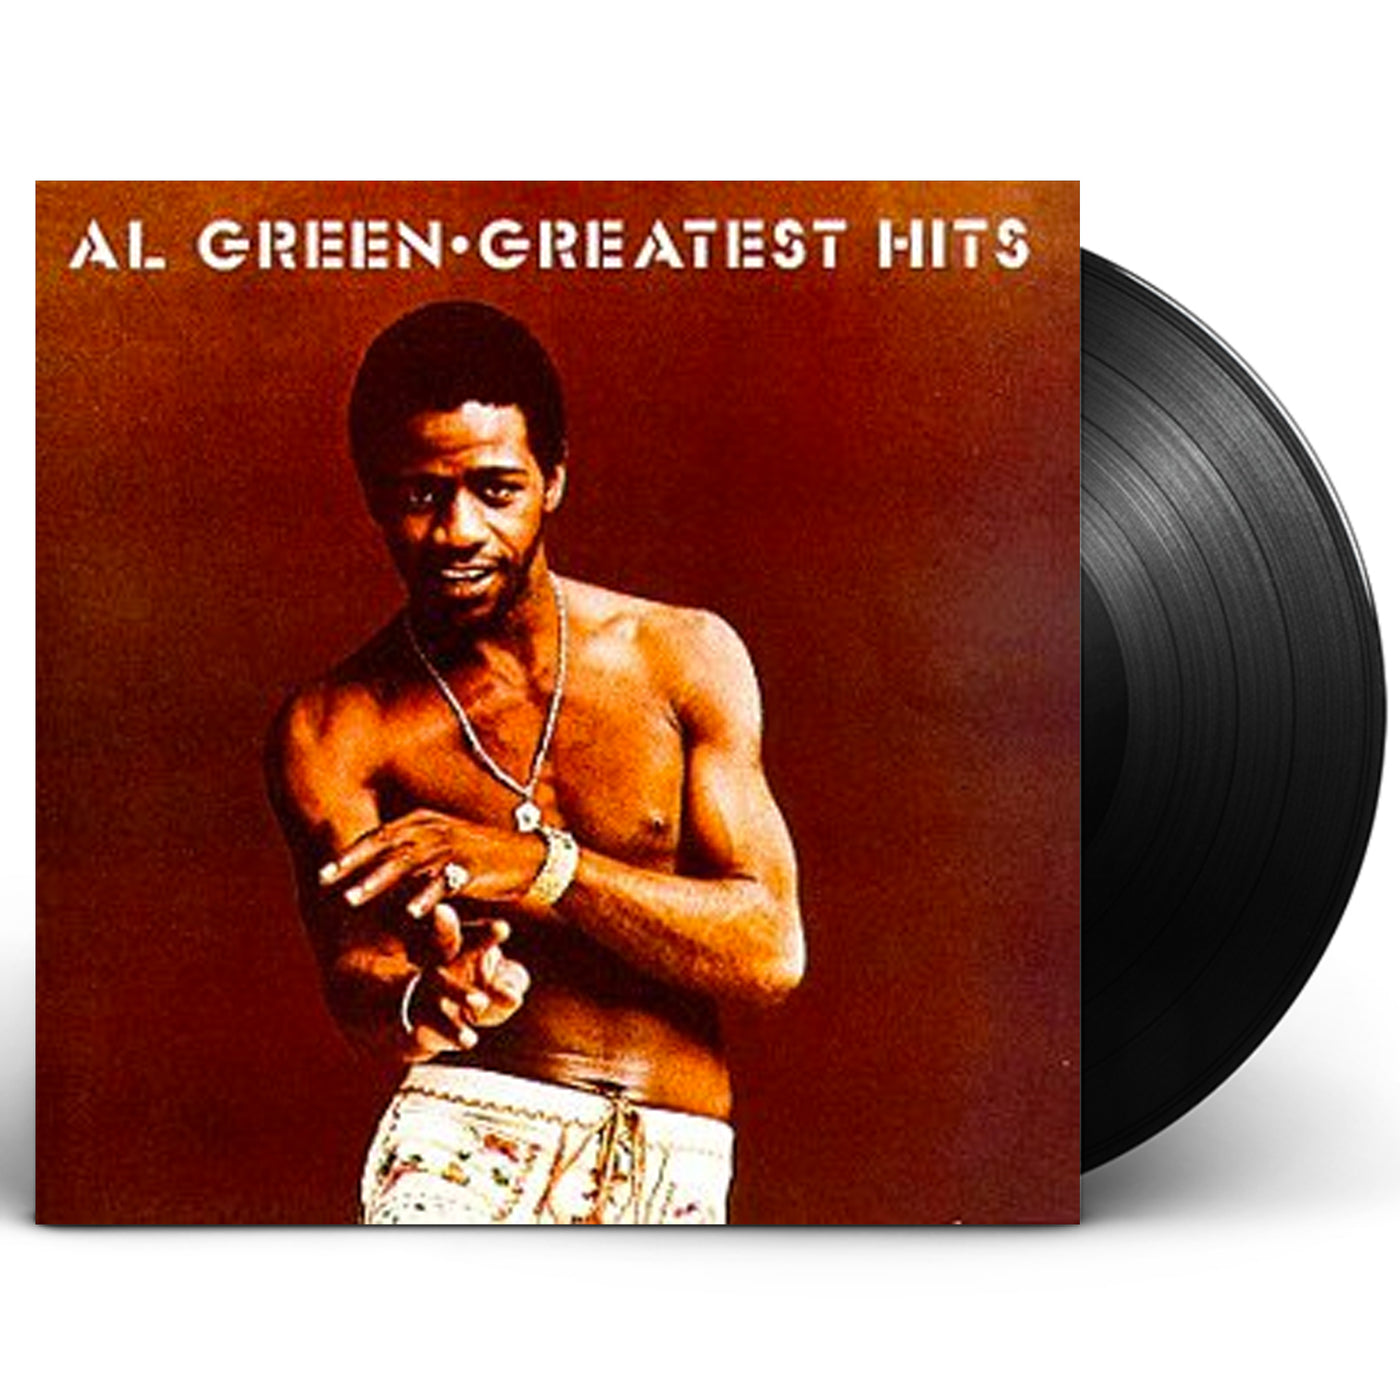 Al Green "Greatest Hits" LP Vinyl